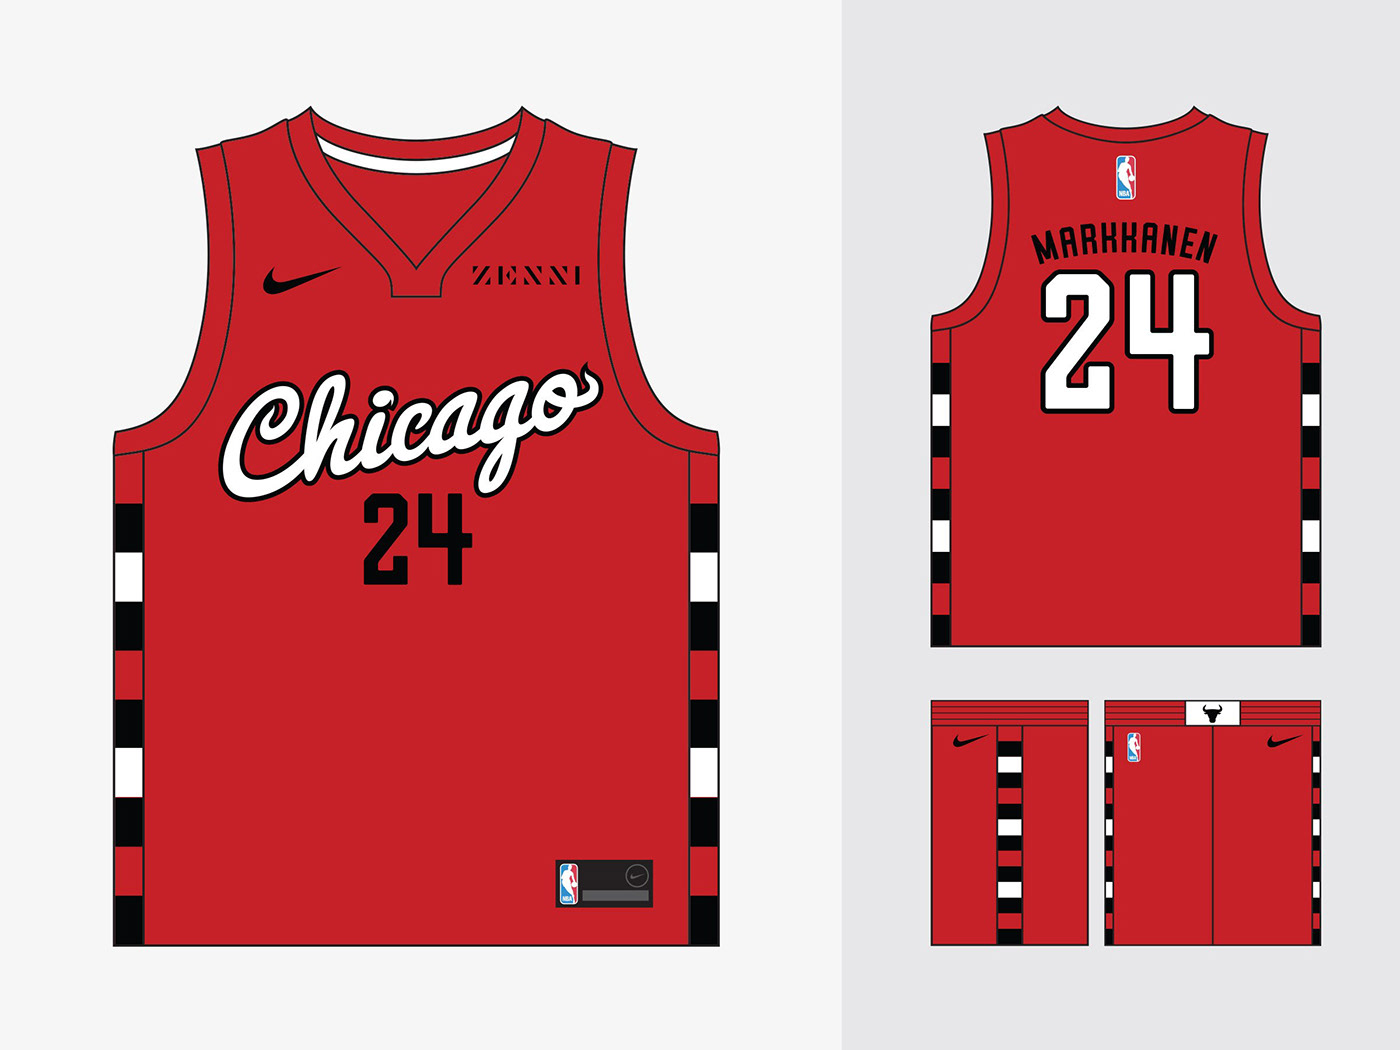 basketball bulls chicago logo NBA Rebrand sports